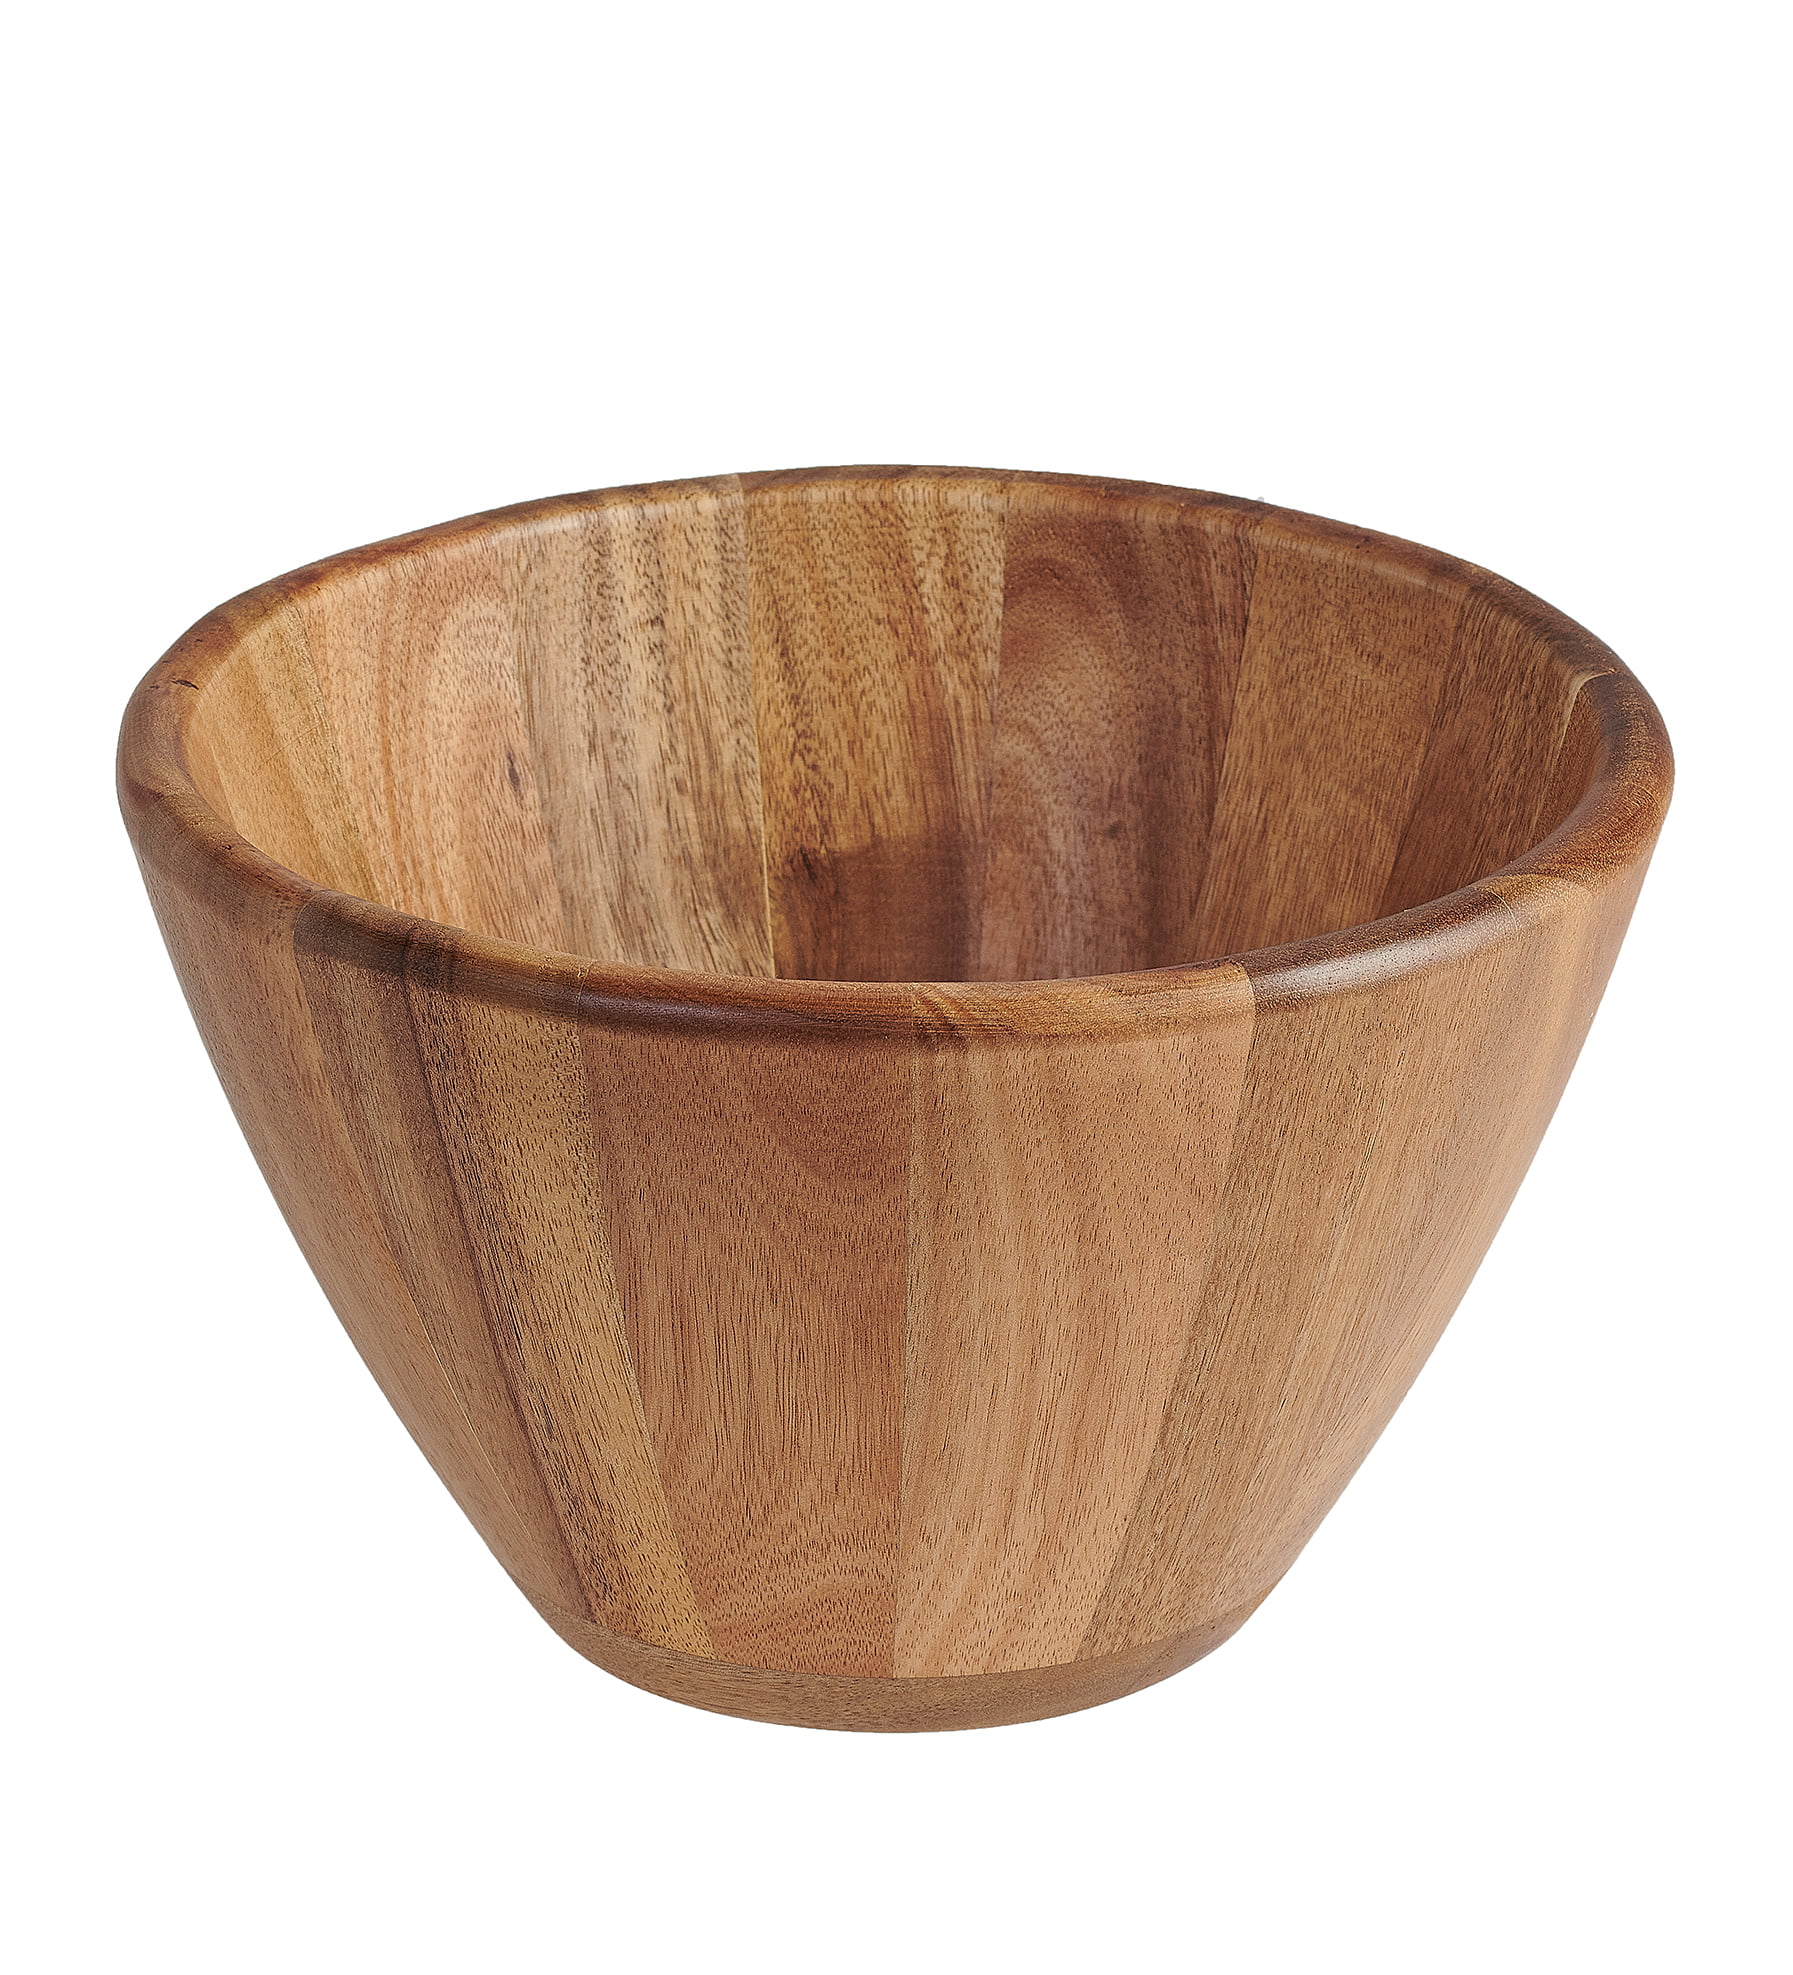 Decorative Bowl Centerpiece Large Serving Salad Wood Bowl Dark Brown 12”x3.5" 